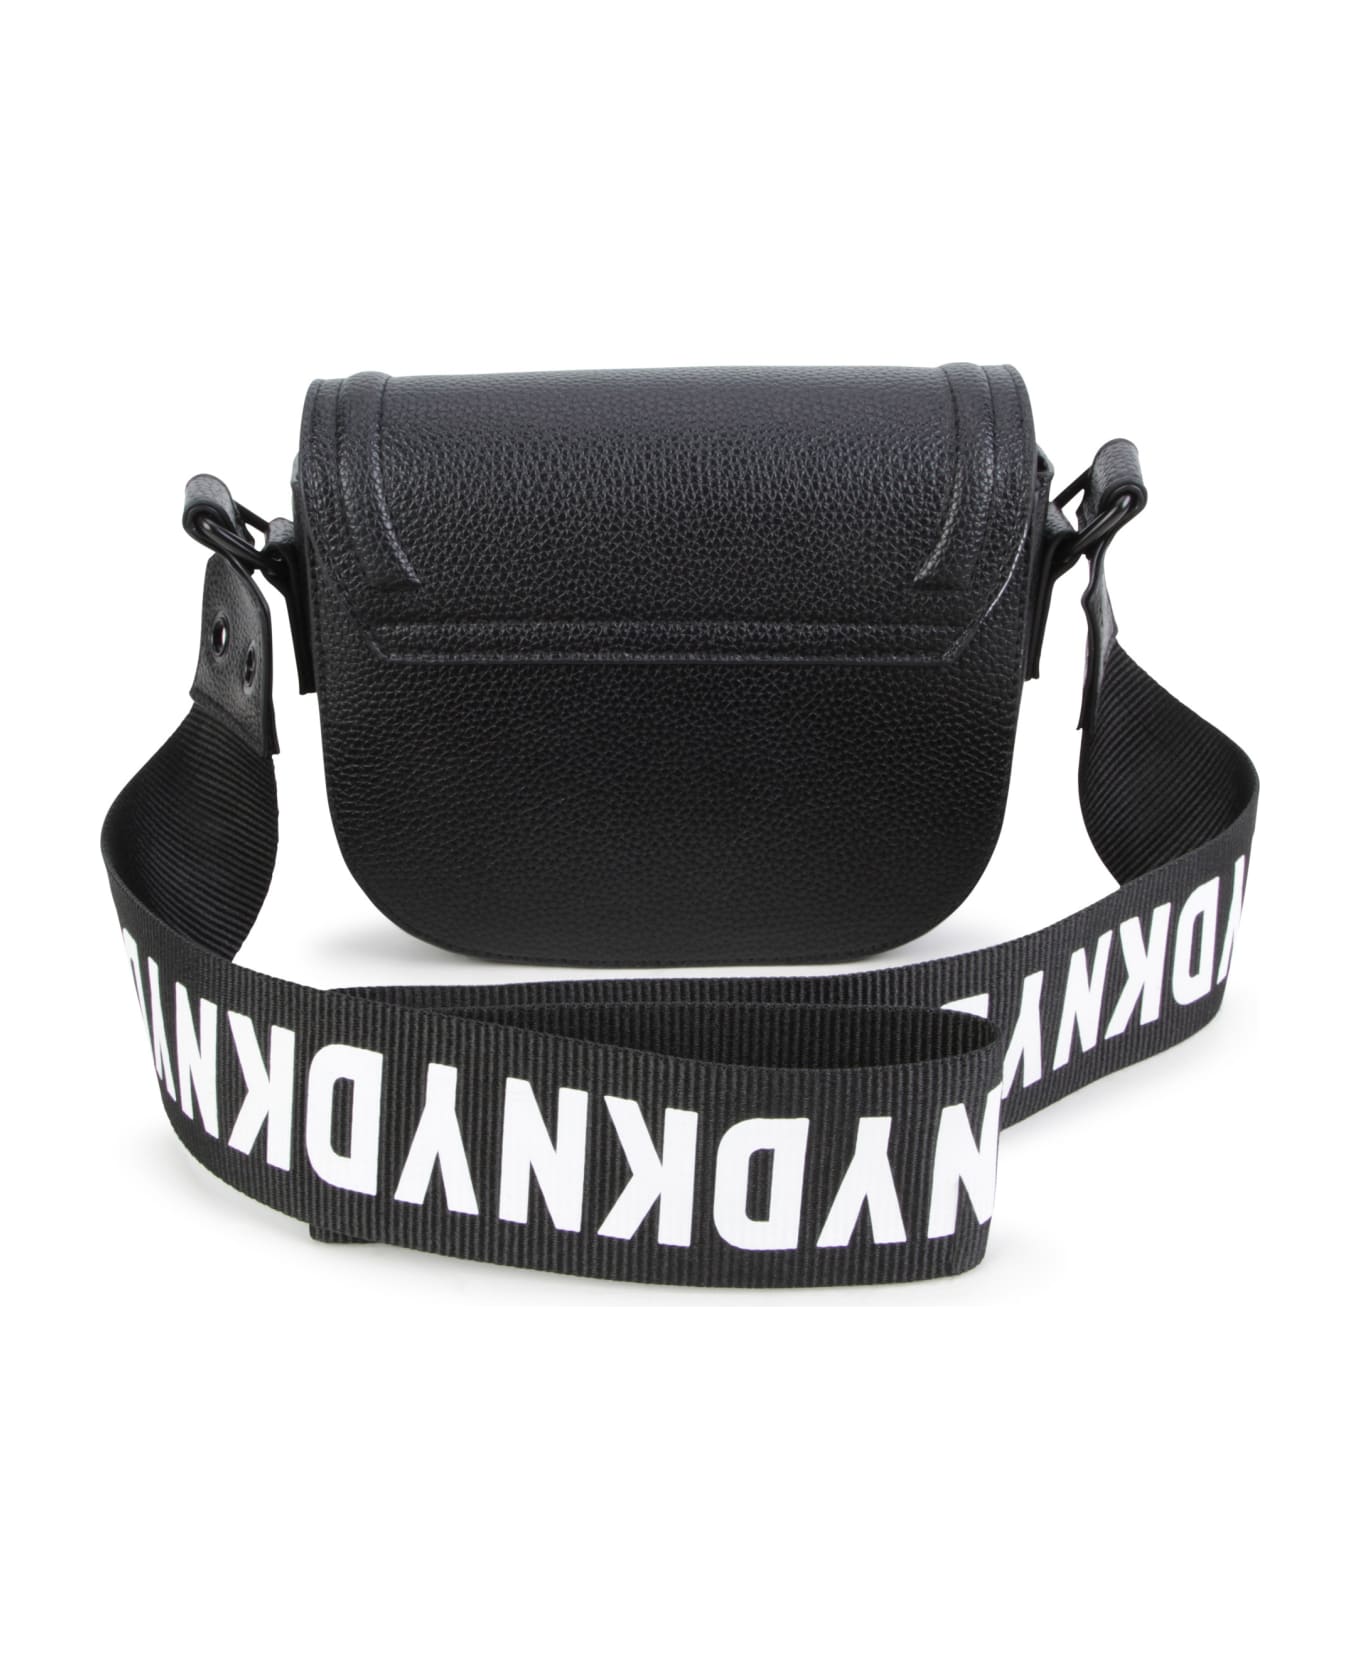 DKNY Bag With Logo - Black